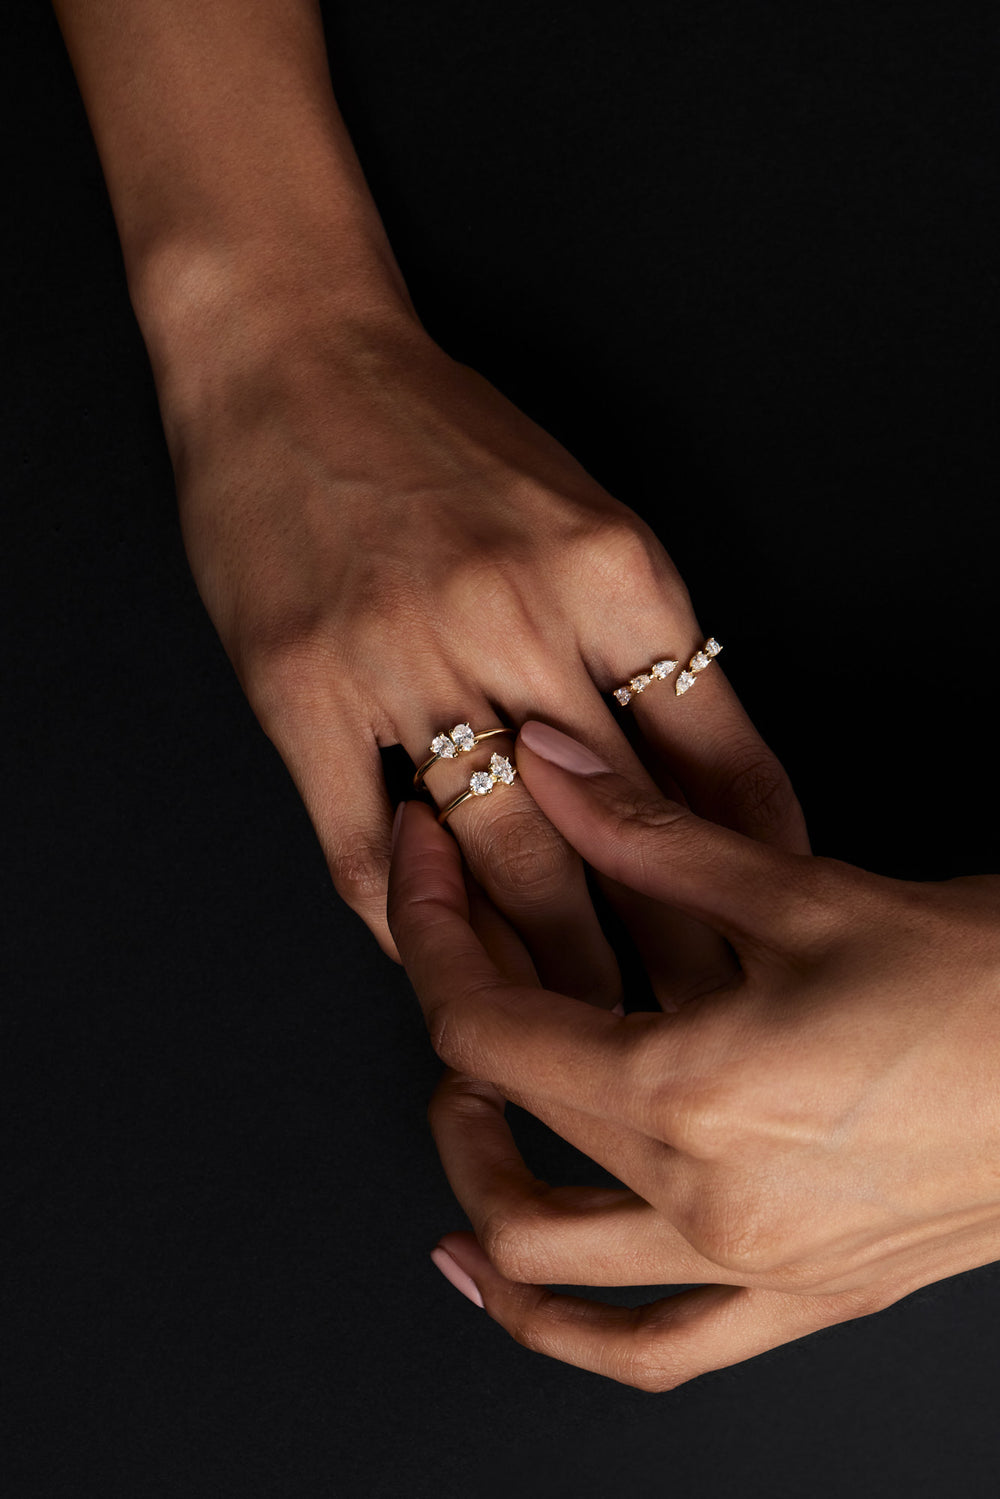 Pear Diamond and Oval Emerald Toi Et Moi Ring | 18K White Gold| Natasha Schweitzer